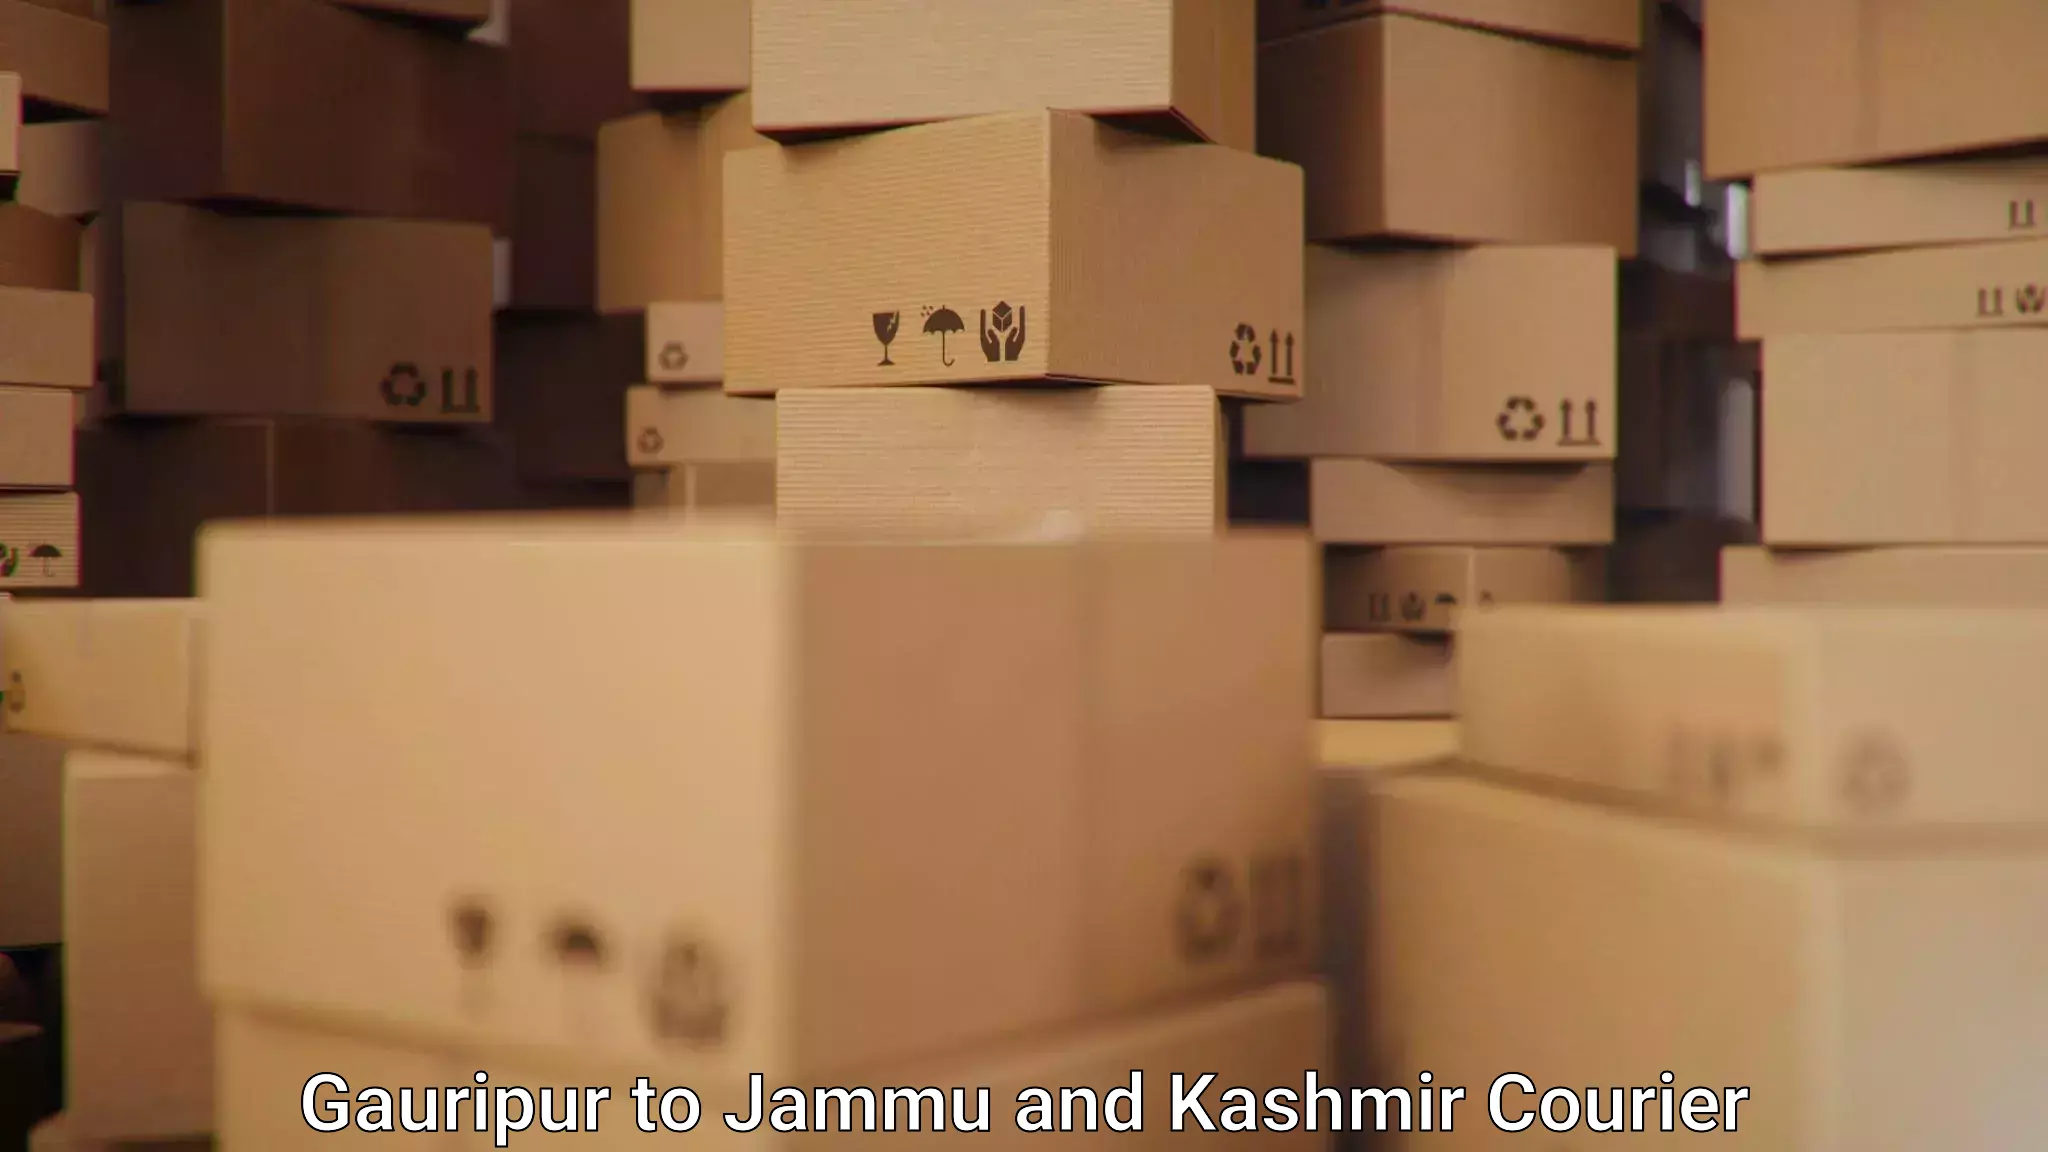 Efficient order fulfillment Gauripur to Jammu and Kashmir